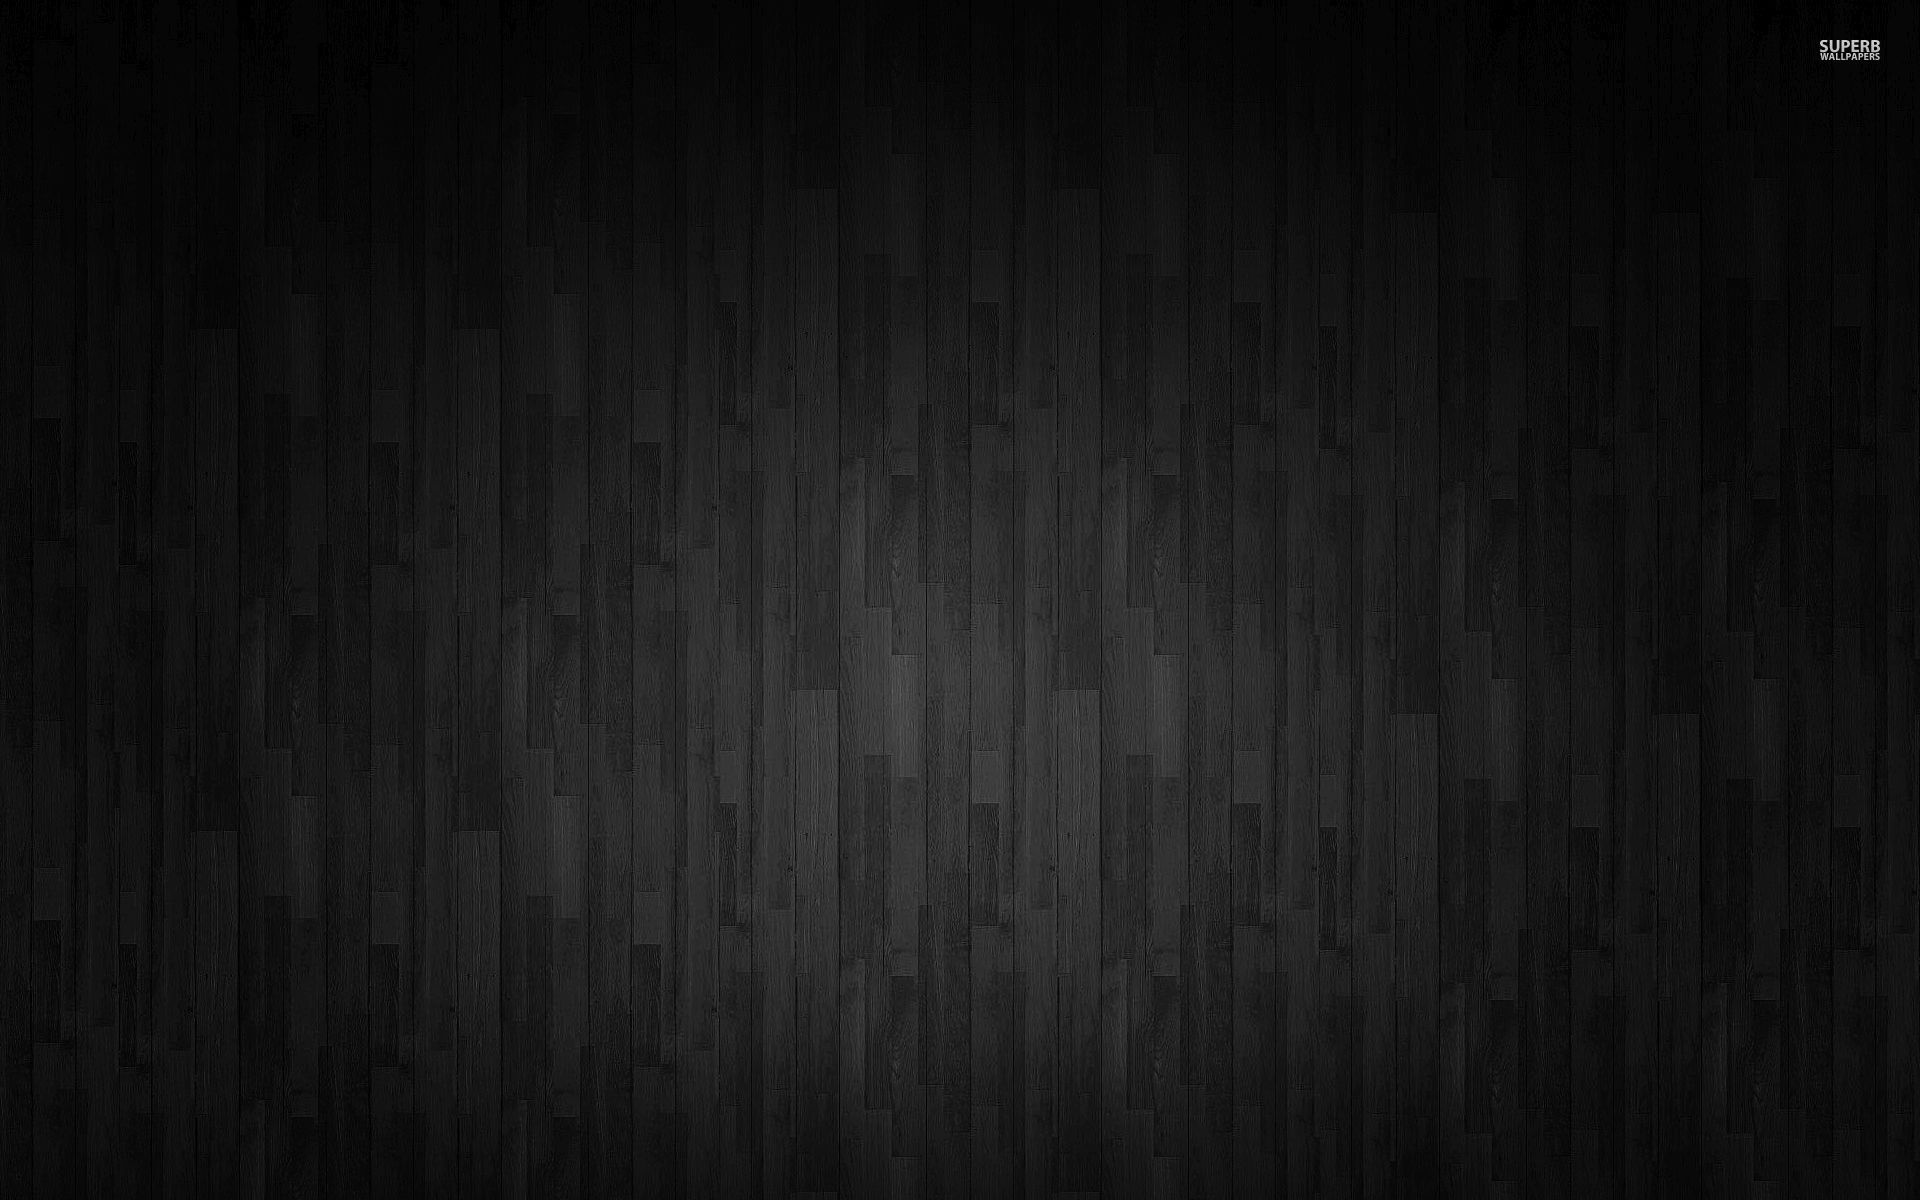 Horizontal dark gray wooden panels wallpaper - Digital Art ...